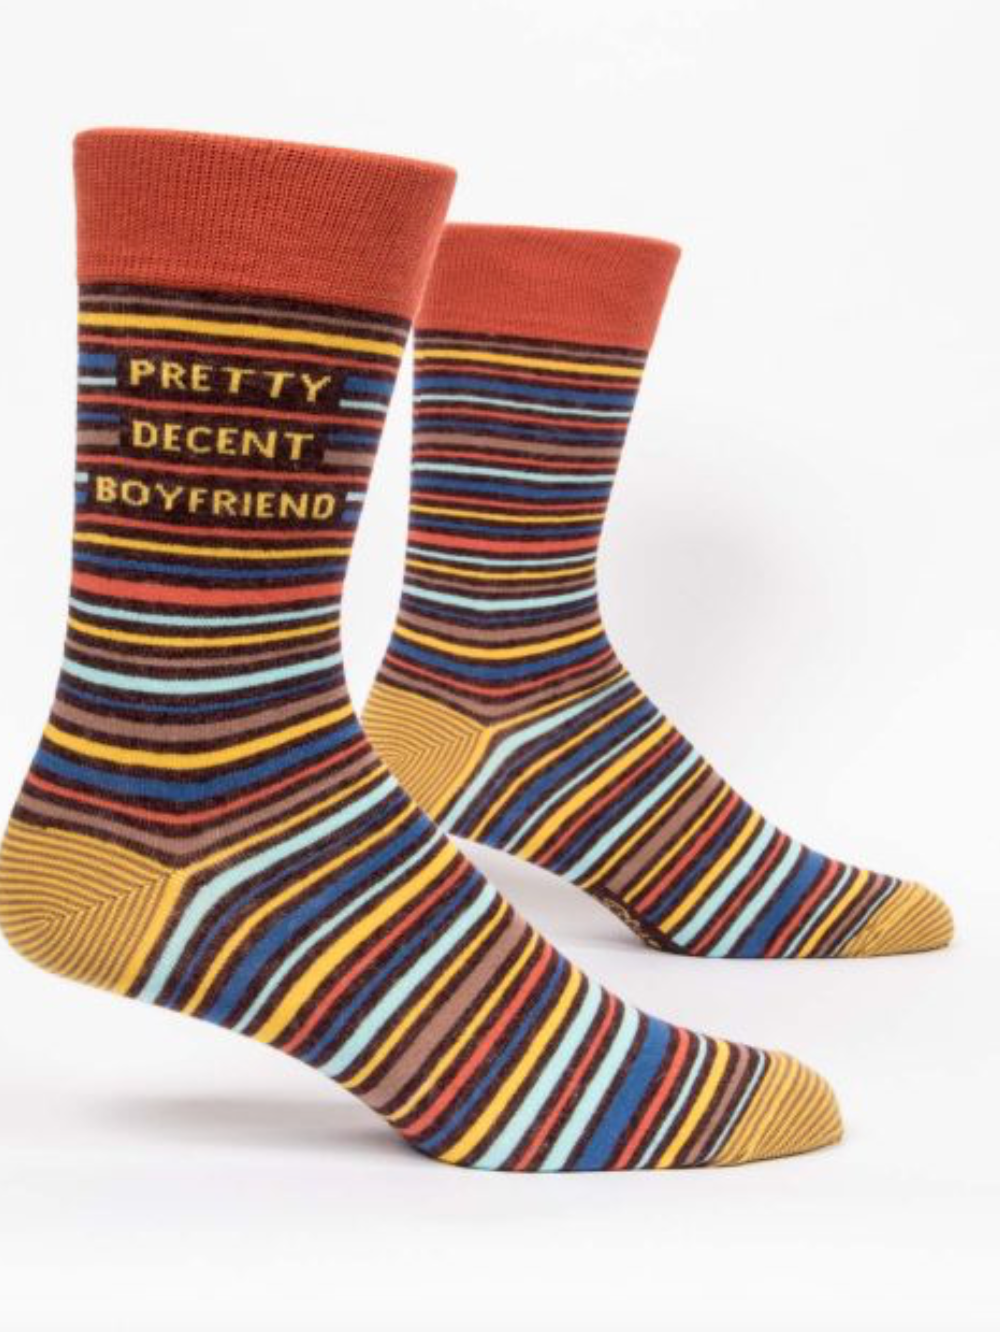 Pretty Decent Boyfriend Socks - Men | JV Studios Boutique